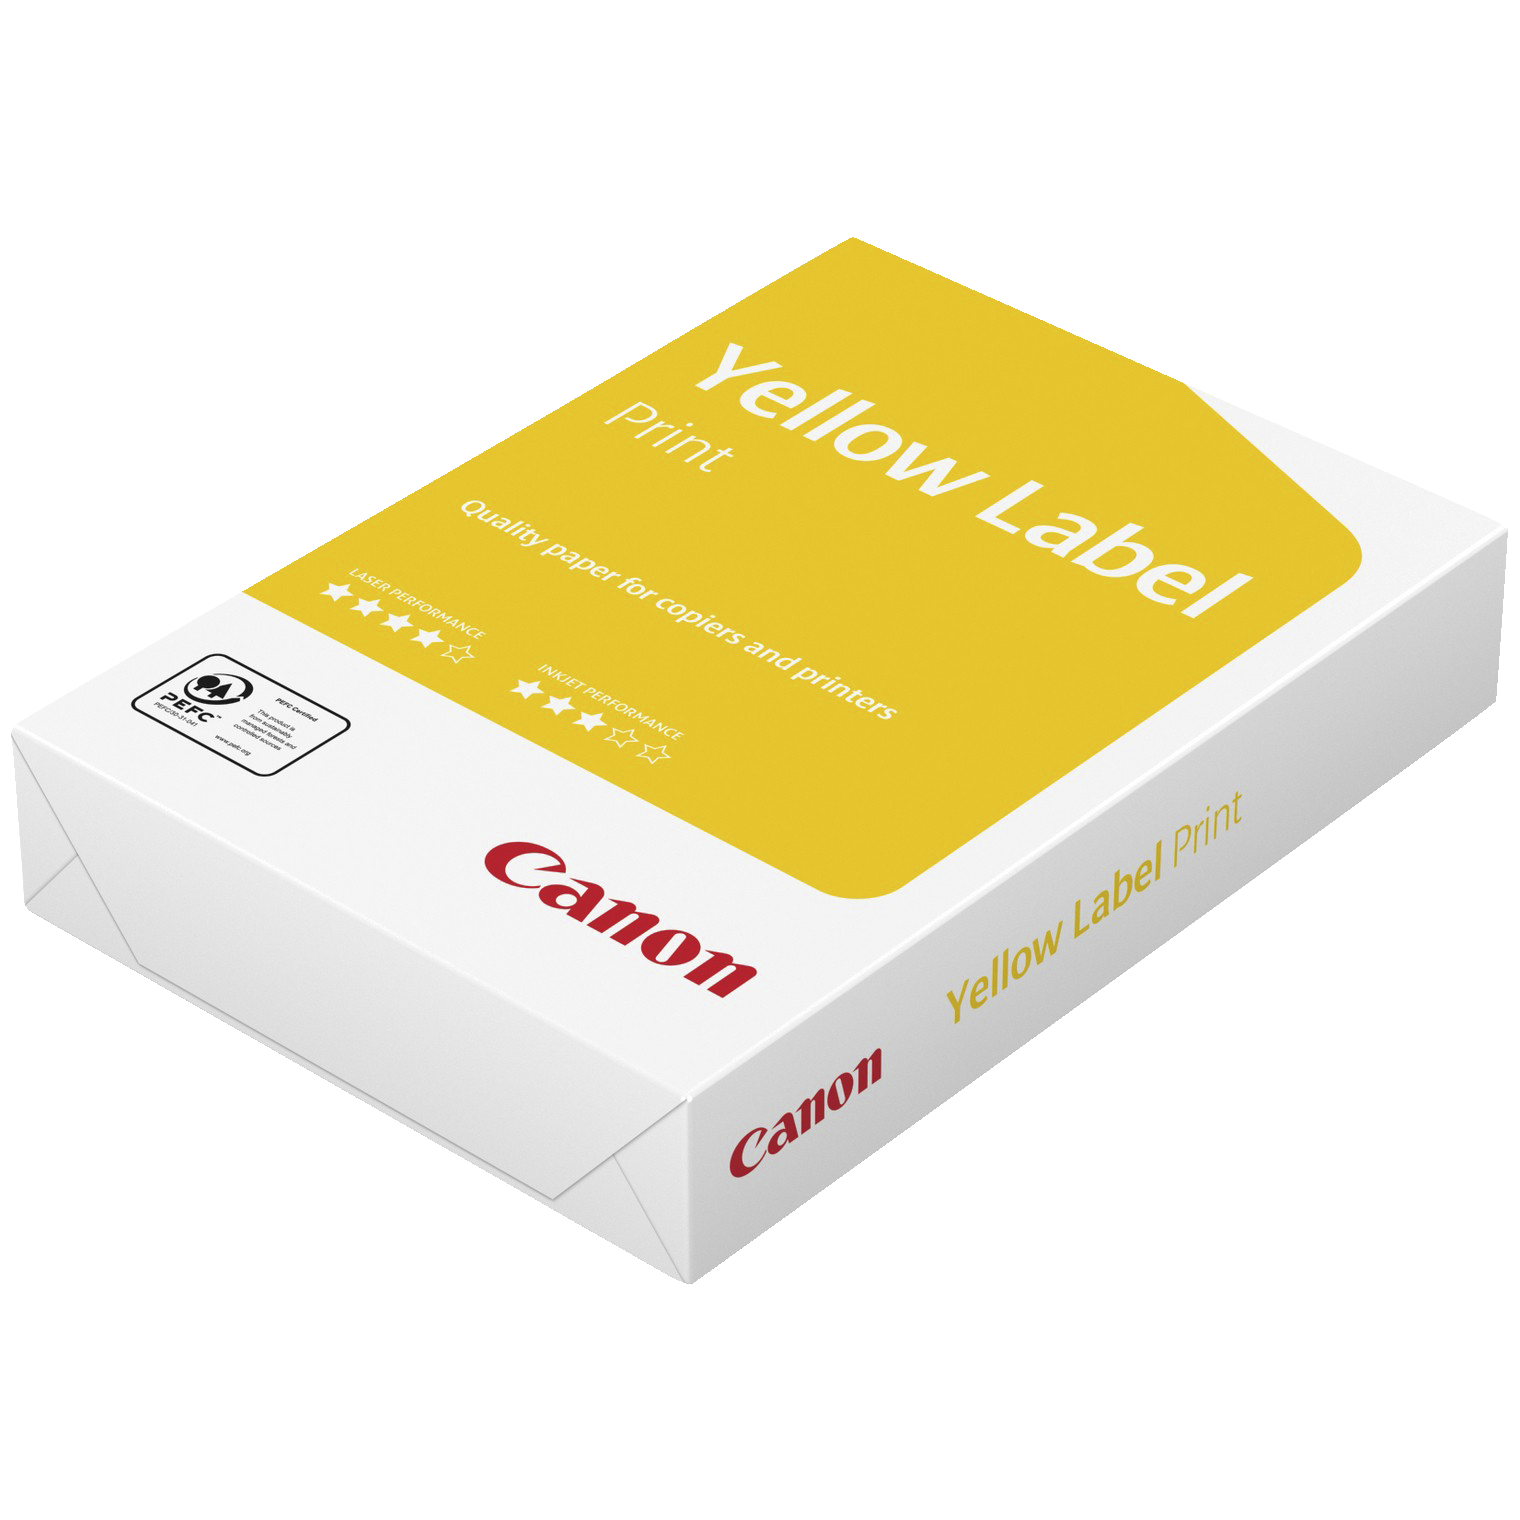 Canon papper Yellow Label A4 (500 ark) - Skrivarpapper och ...